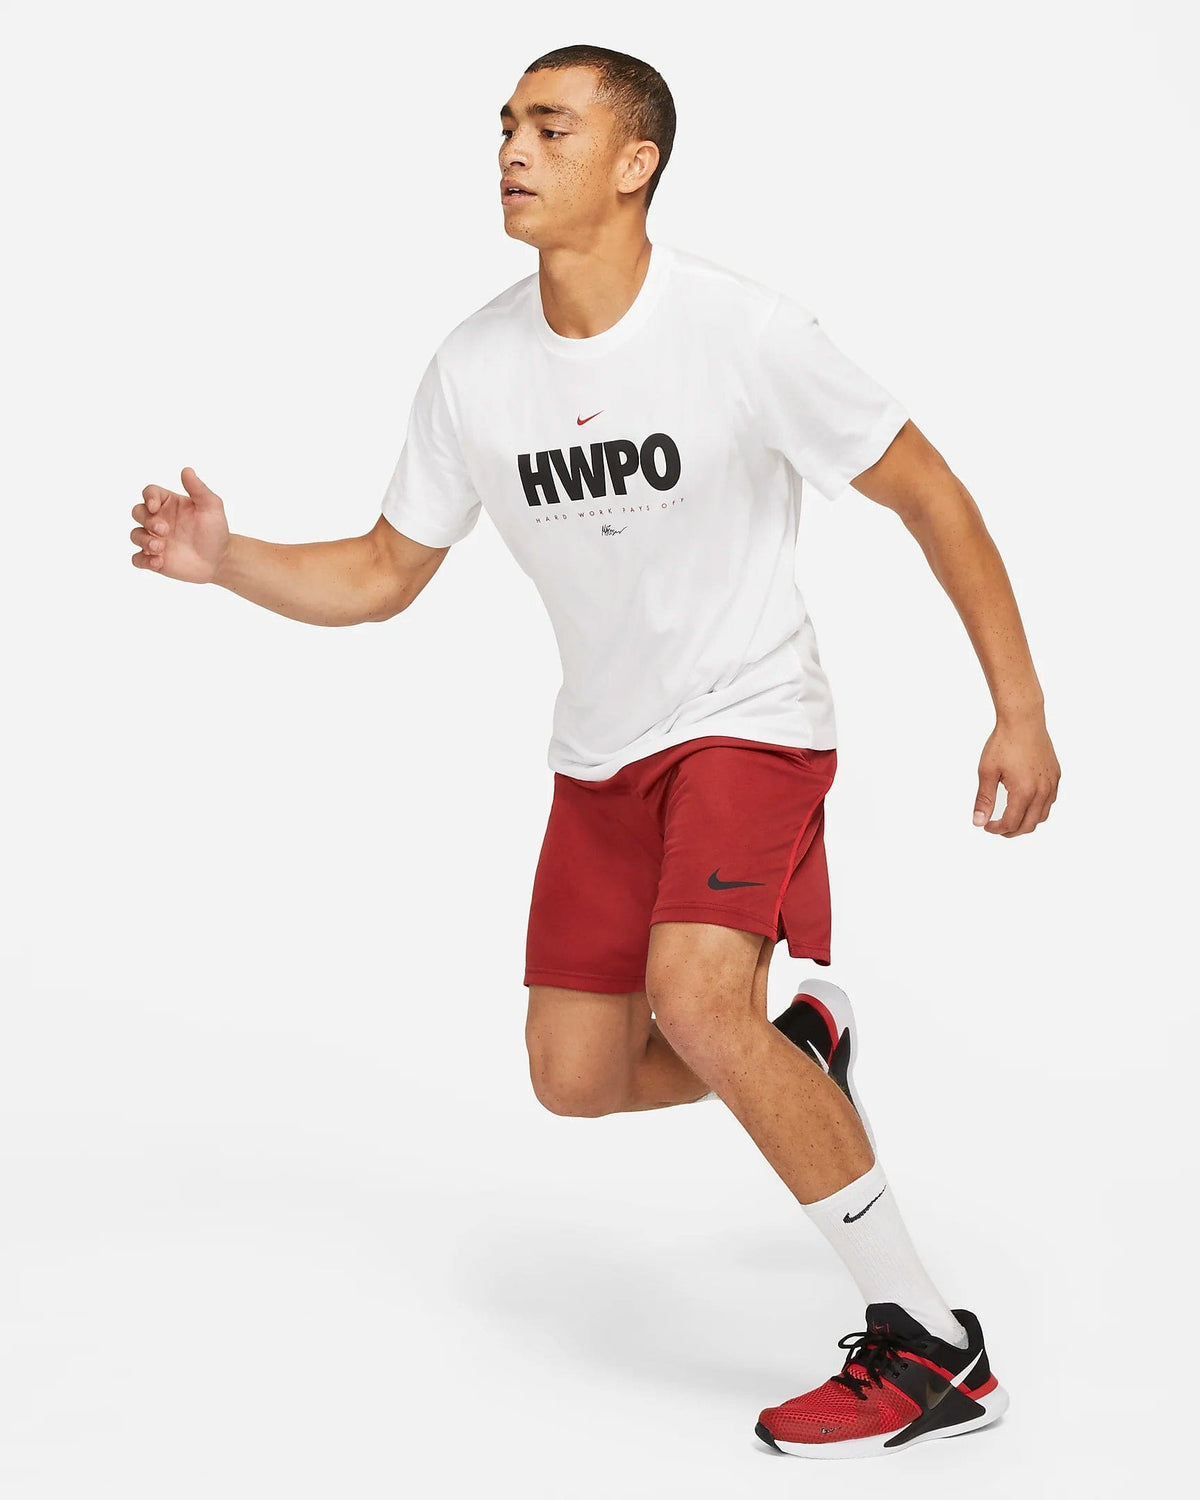 Men's Nike "HWPO" Training Tee